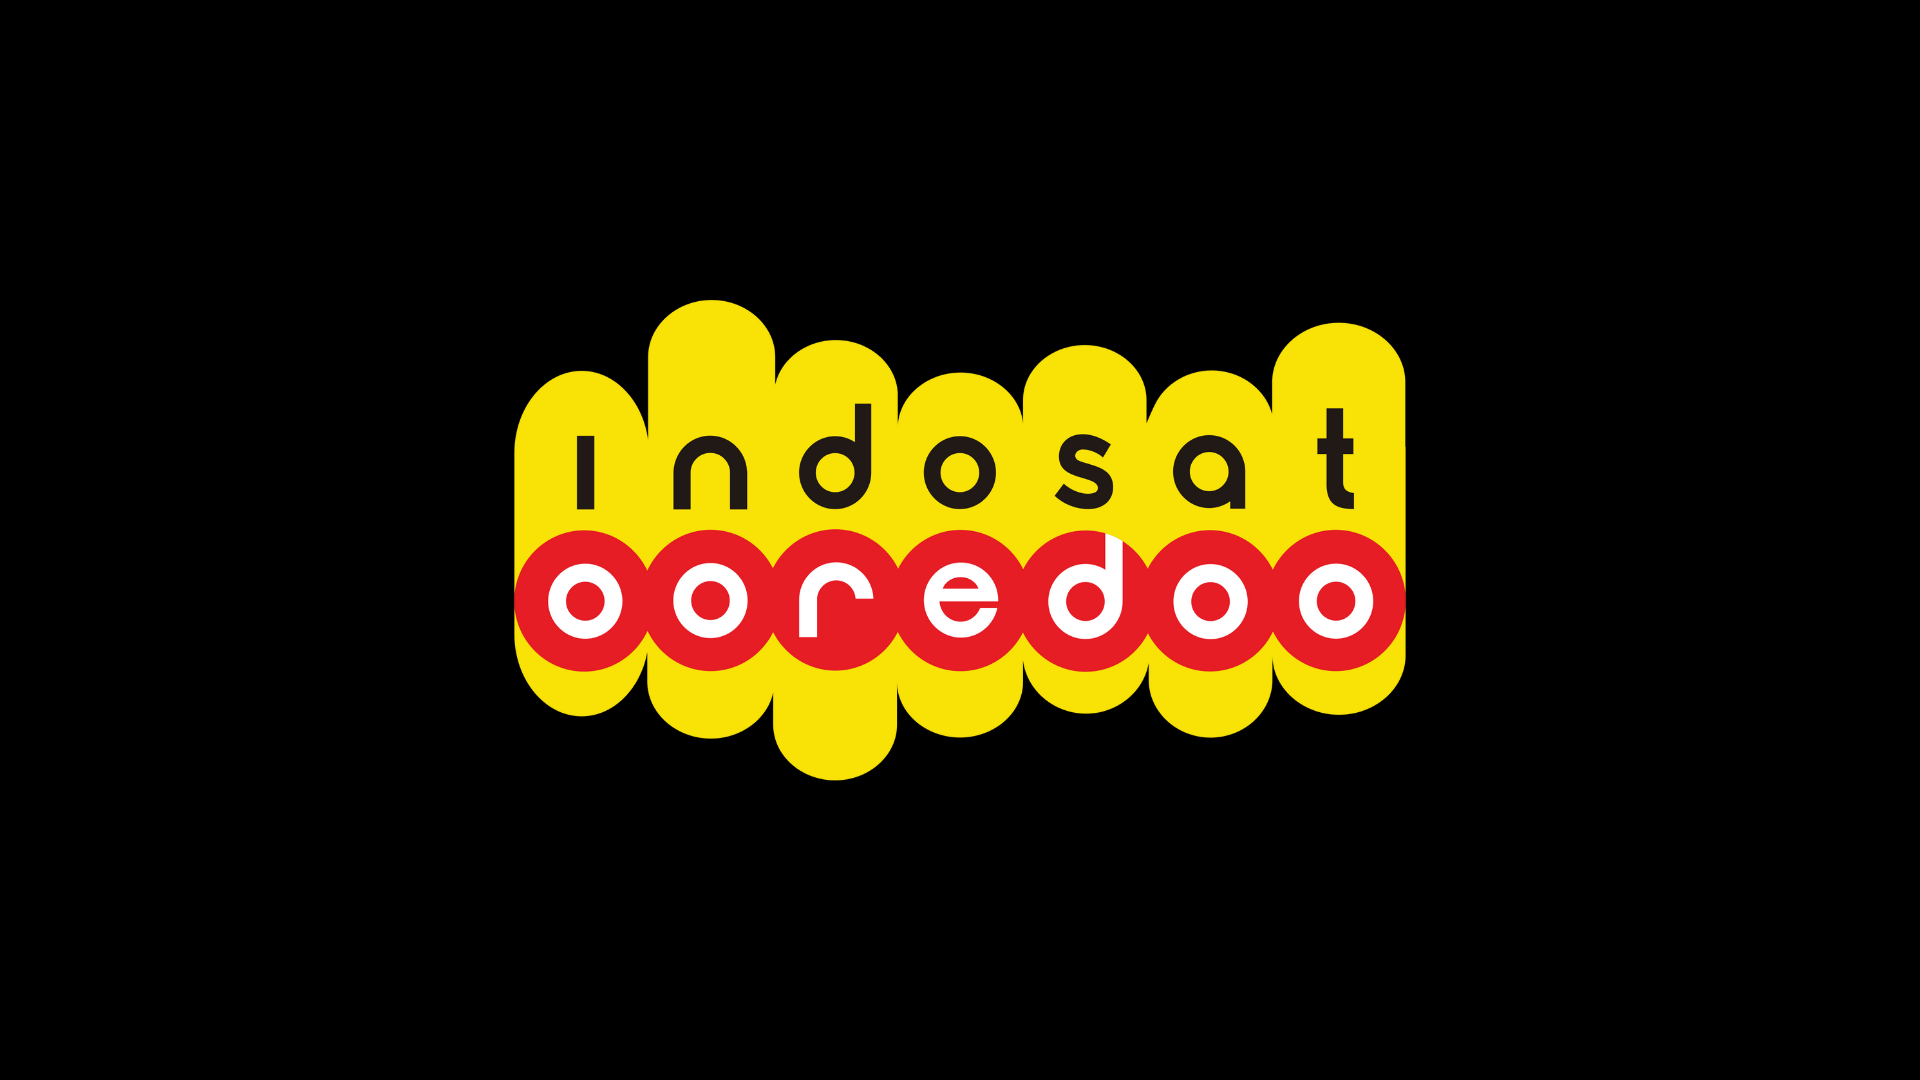 Nomor Pesan Pusat Indosat Ooredoo, Begini Cara Ceknya